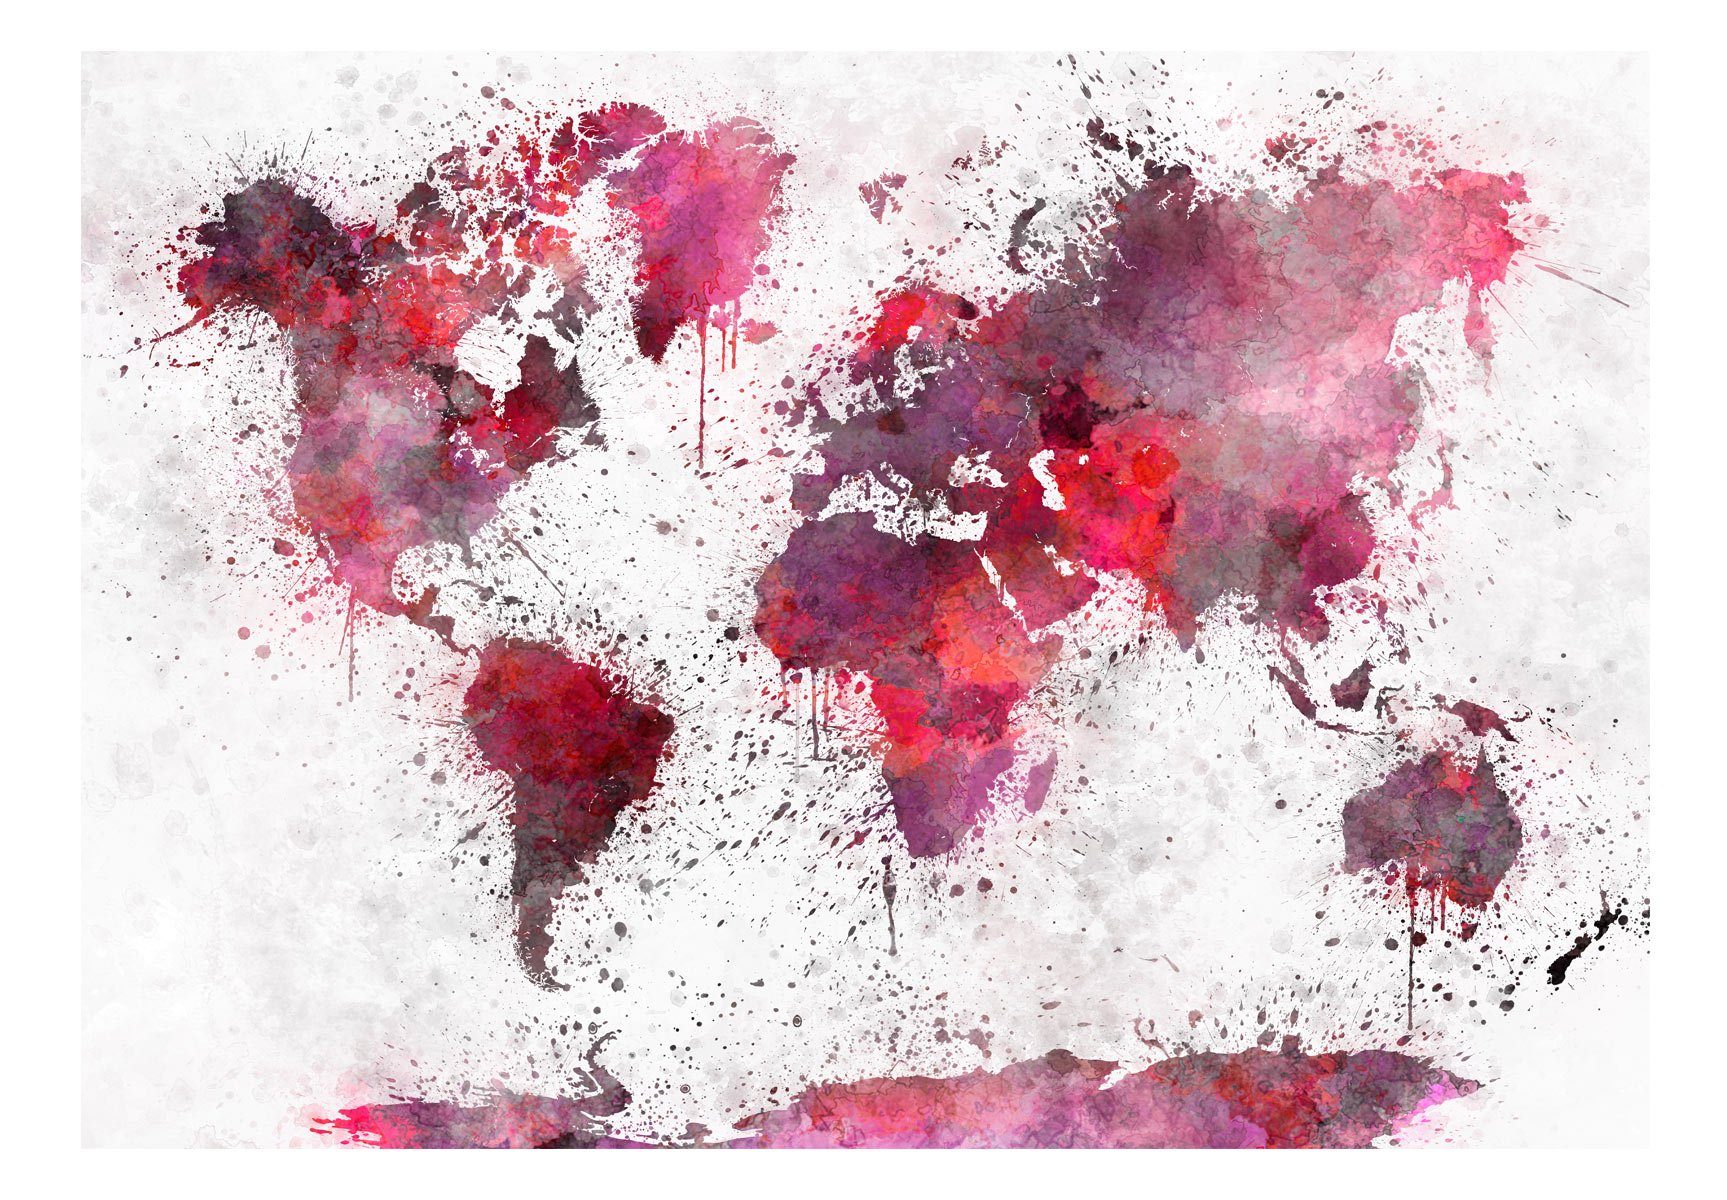 KUNSTLOFT Vliestapete World Map: Red Tapete 0.98x0.7 halb-matt, m, matt, Design Watercolors lichtbeständige